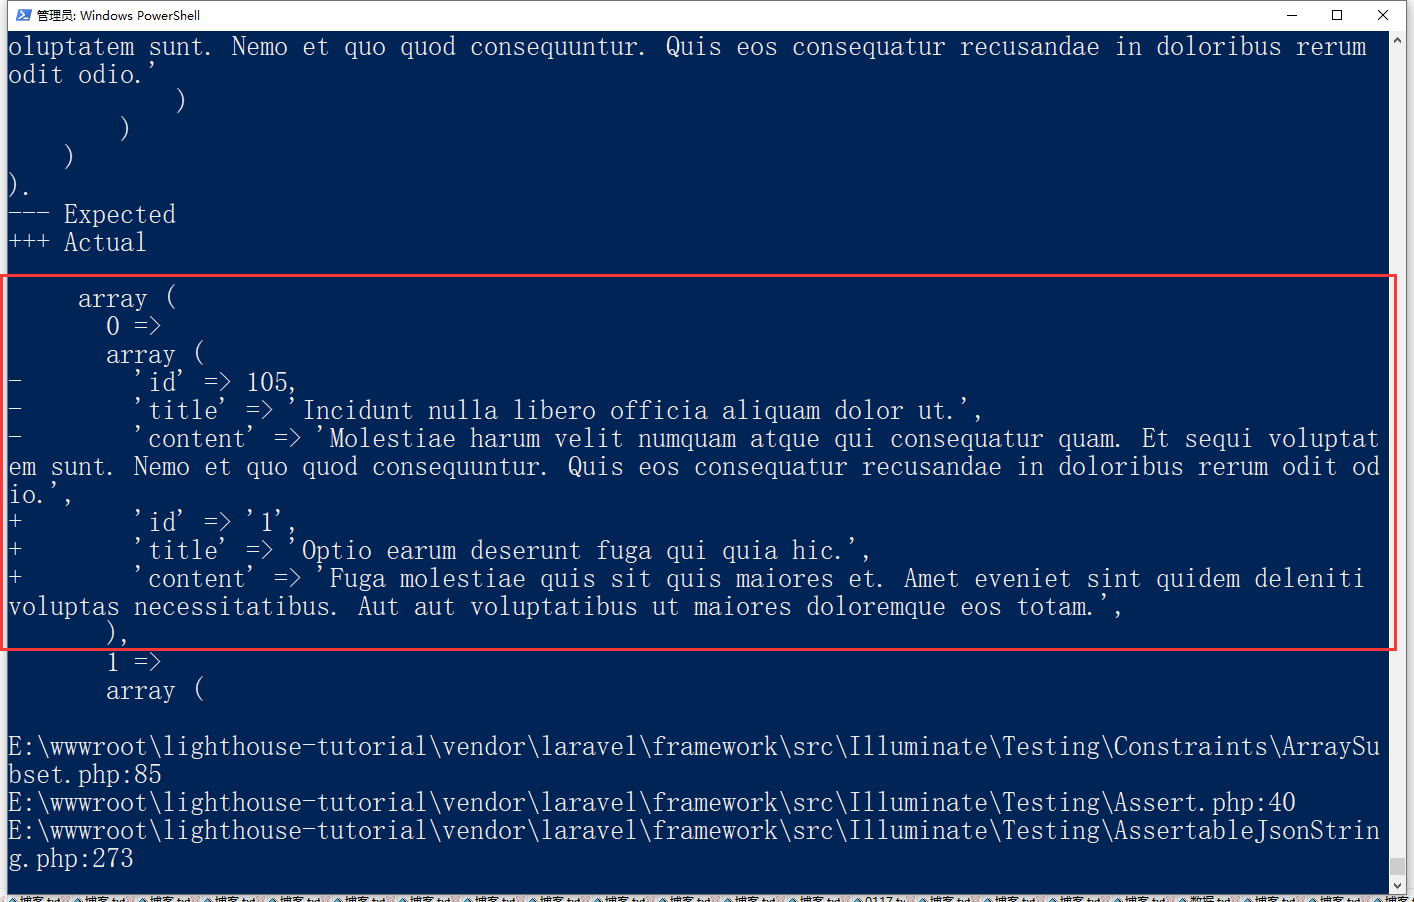 运行测试：./vendor/bin/phpunit .\tests\Feature\PostsGraphQlApiTest.php ，报错：Failed asserting that an array has the subset Array。但是响应确定是 JSON 的结构的，只不过未匹配上第一个元素